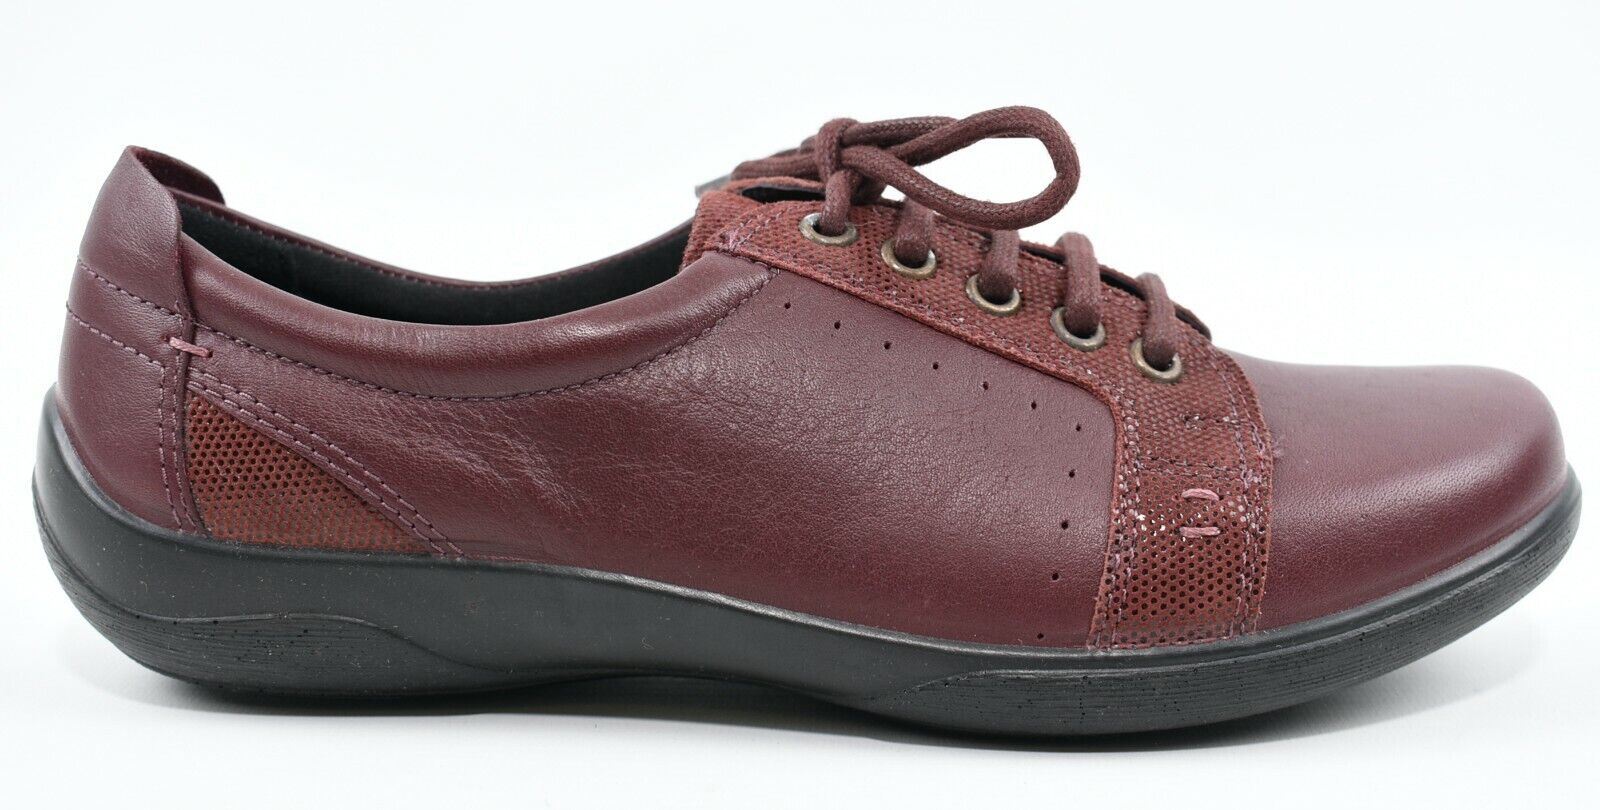 PADDERS Women's SONNET Leather Shoes, Plum, size UK 6 Super Wide Fit